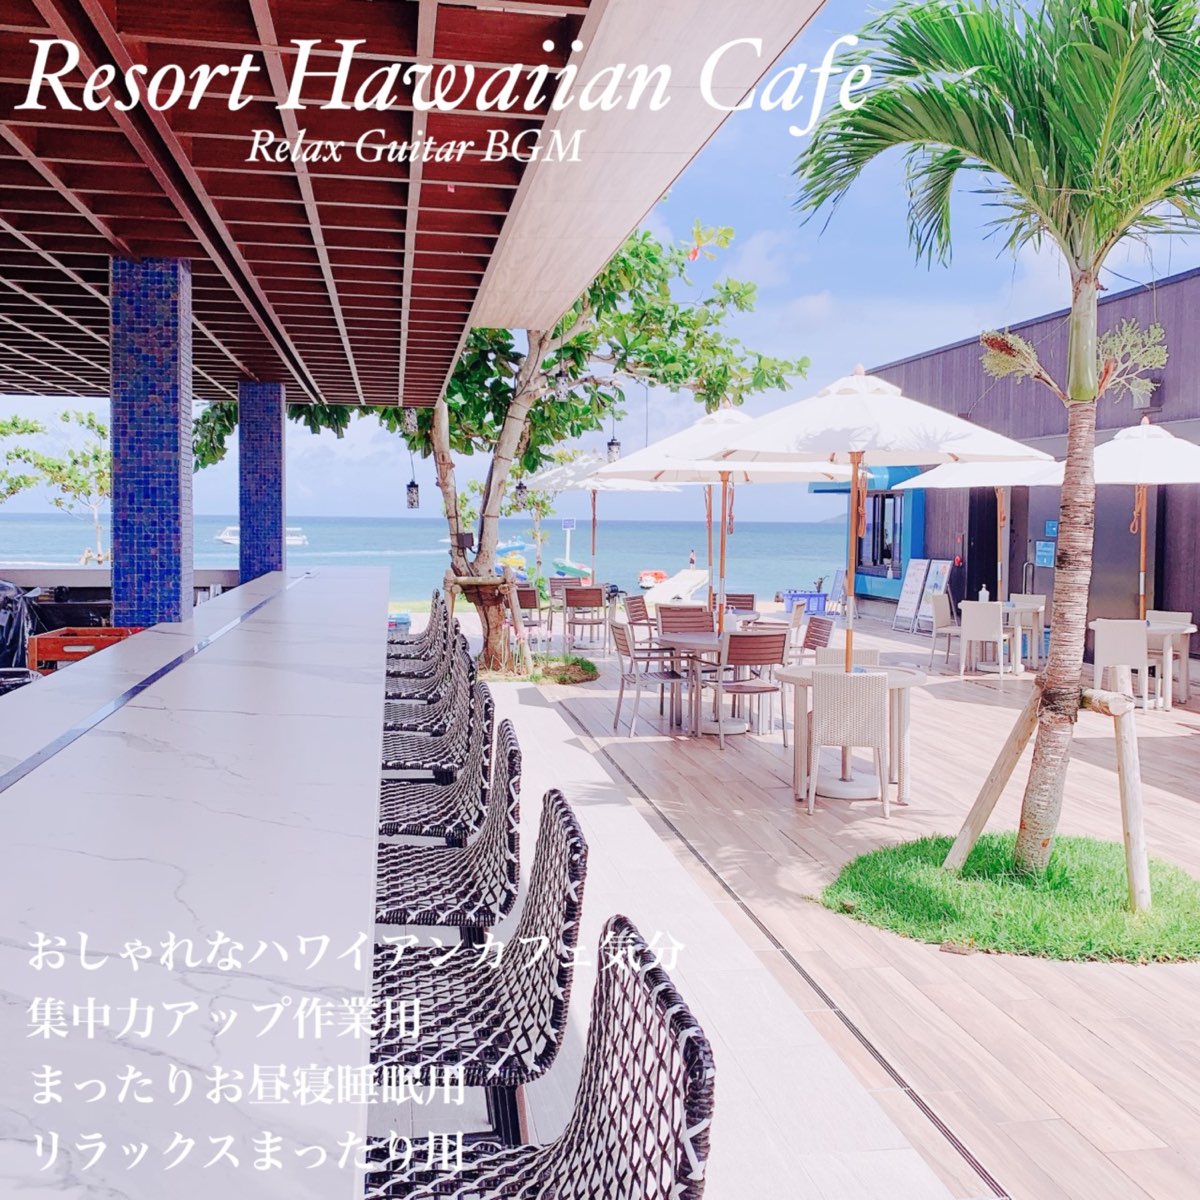 Apple Music 上dj Relax Bgm的专辑 Resort Hawaiian Cafe Relax Guitar Bgm おしゃれなハワイアンカフェ気分 集中力アップ作業用 まったりお昼寝睡眠用 リラックスまったり用